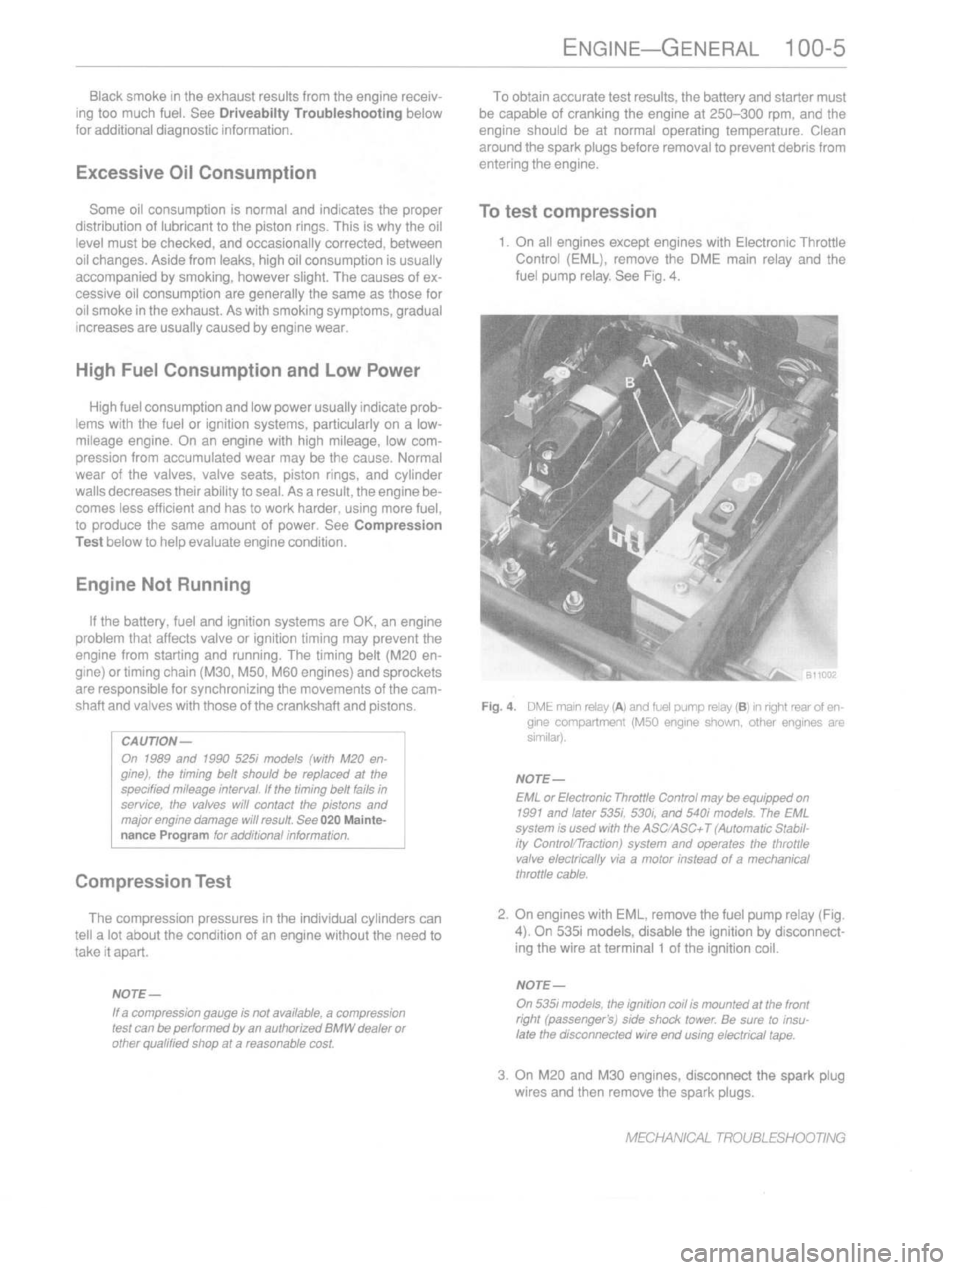 BMW 530i 1989 E34 Service Manual 